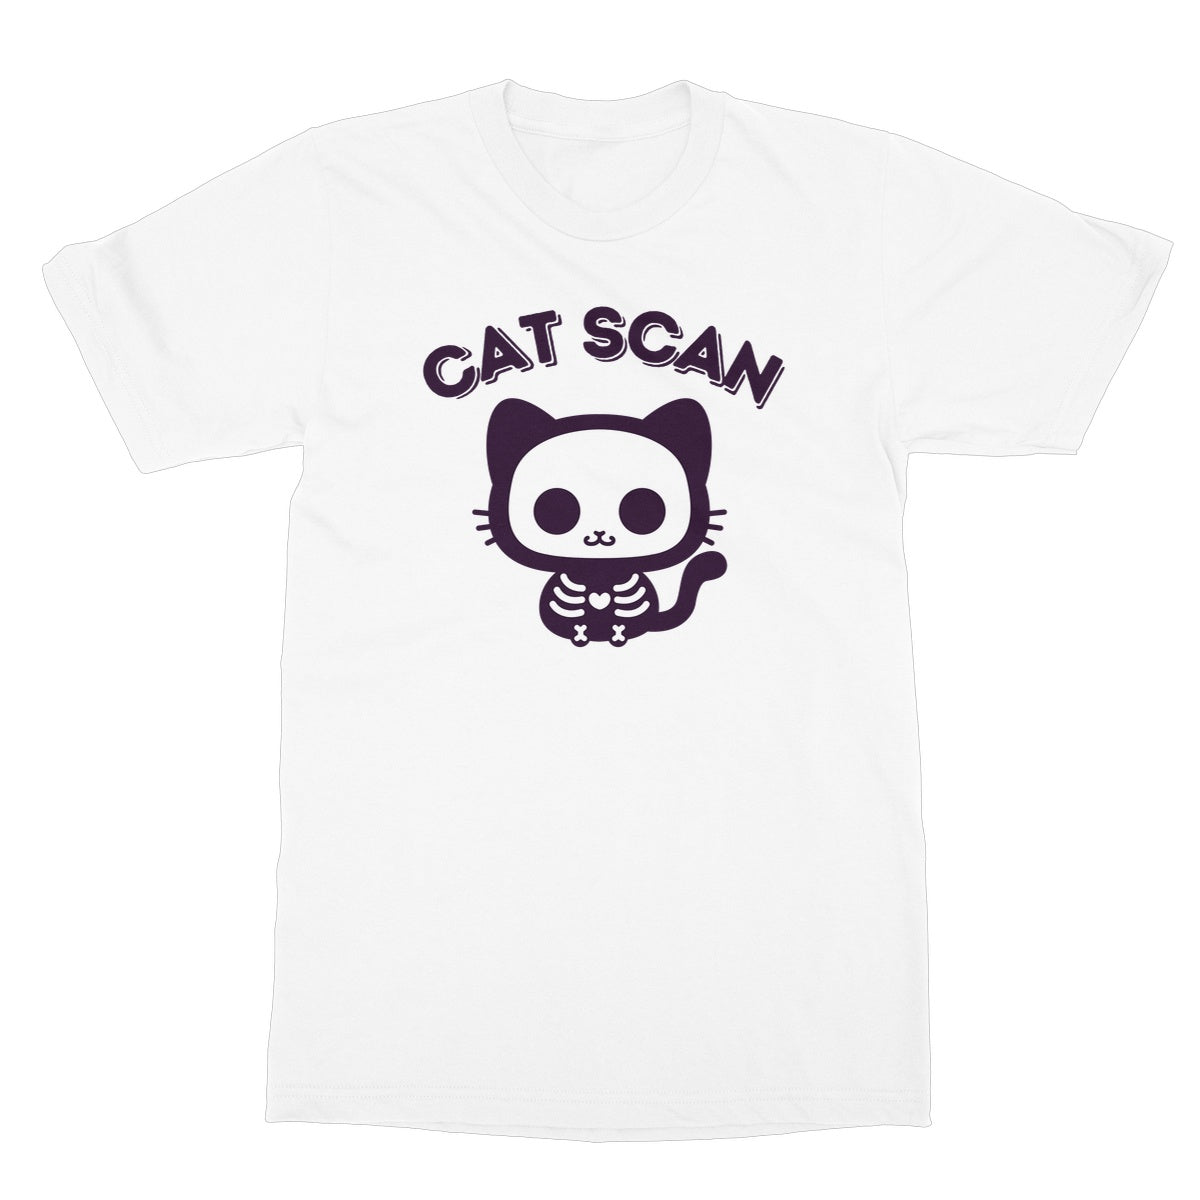 cat scan t shirt white